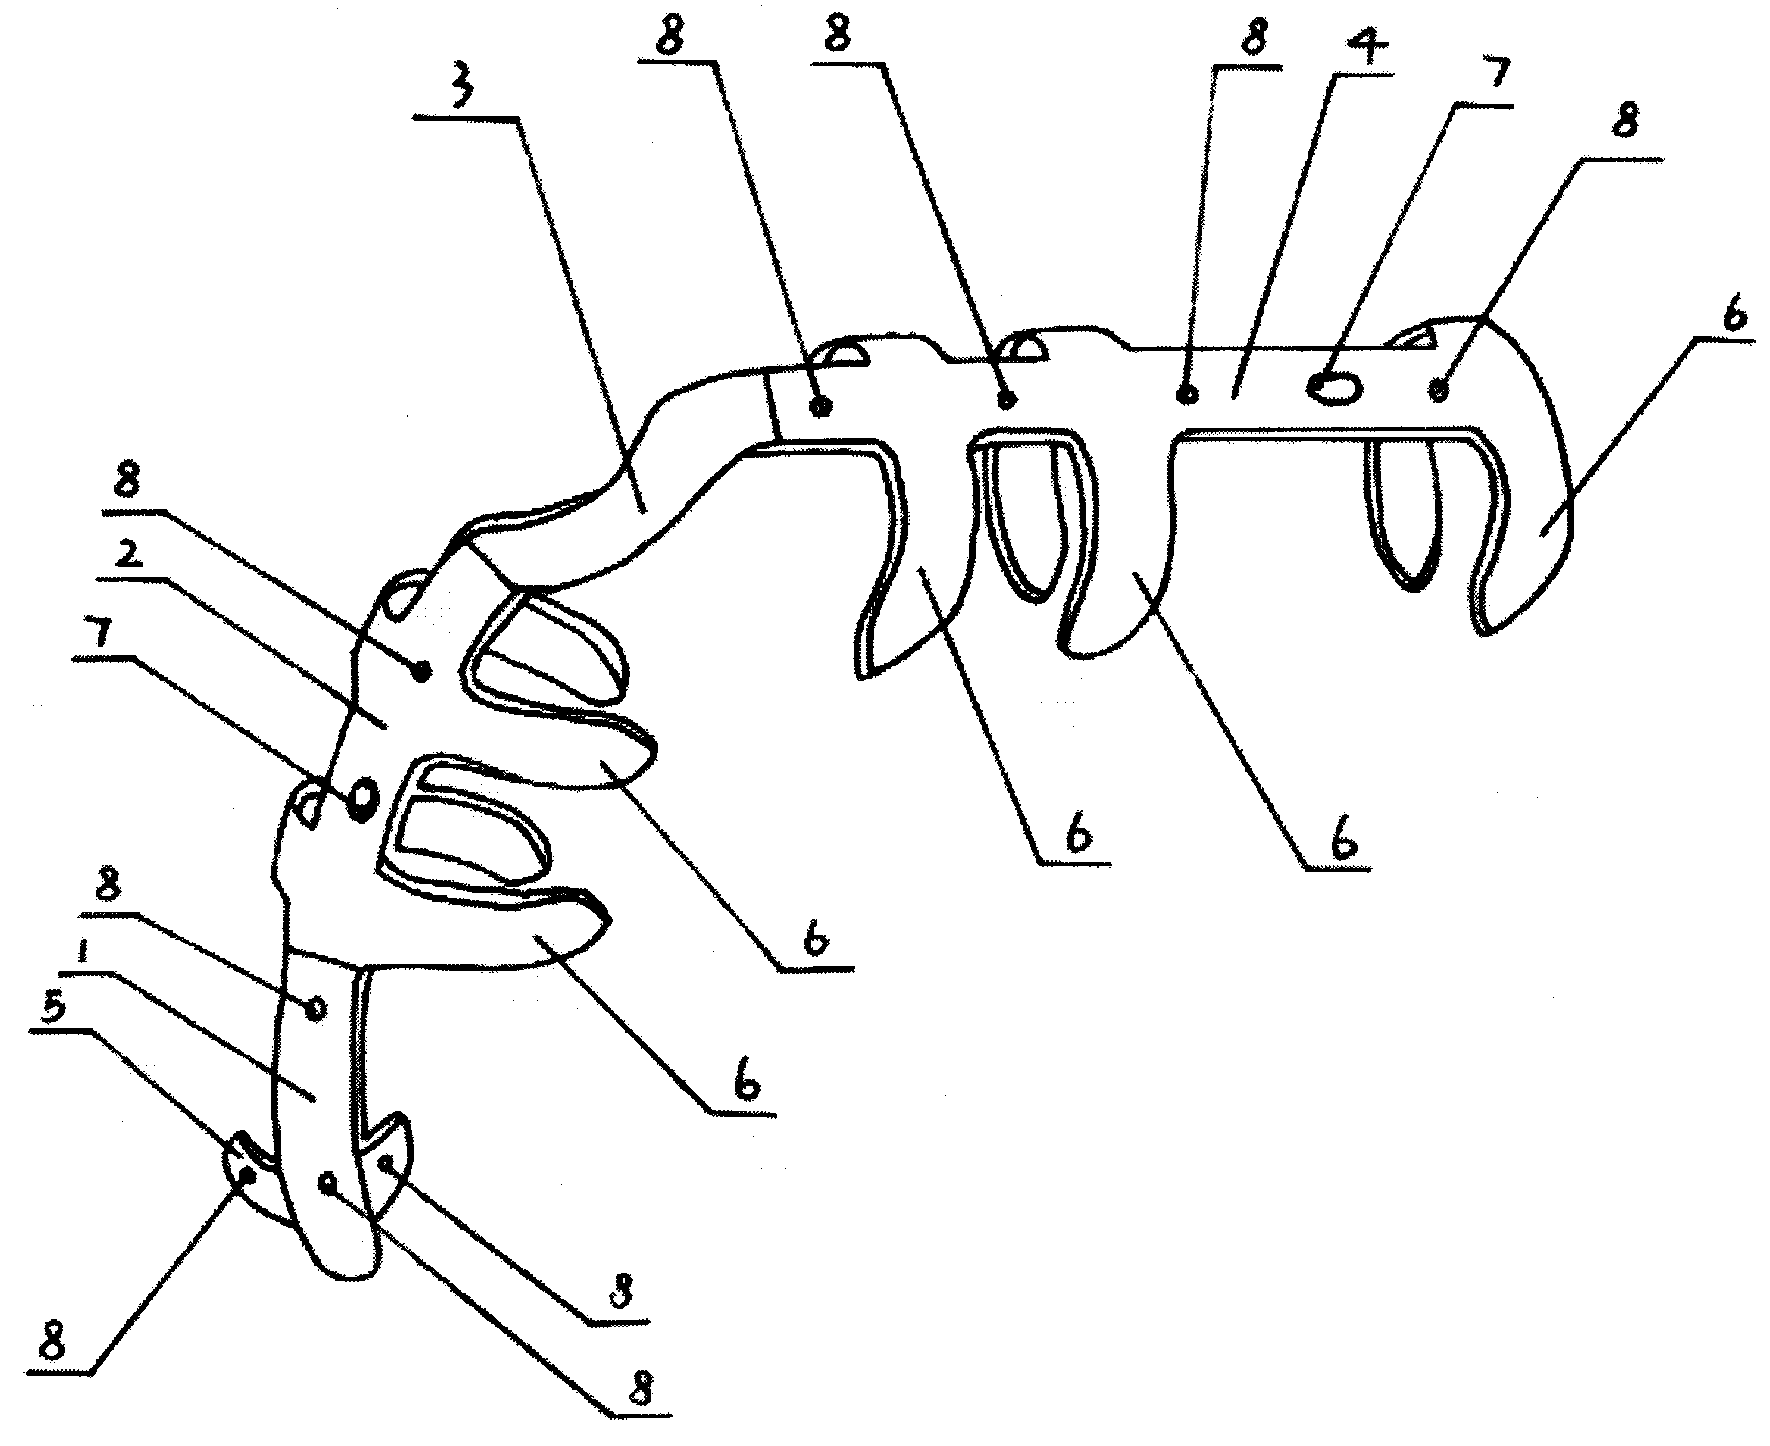 Fixator combining mesoscapula part, acromion part and distal clavicle part